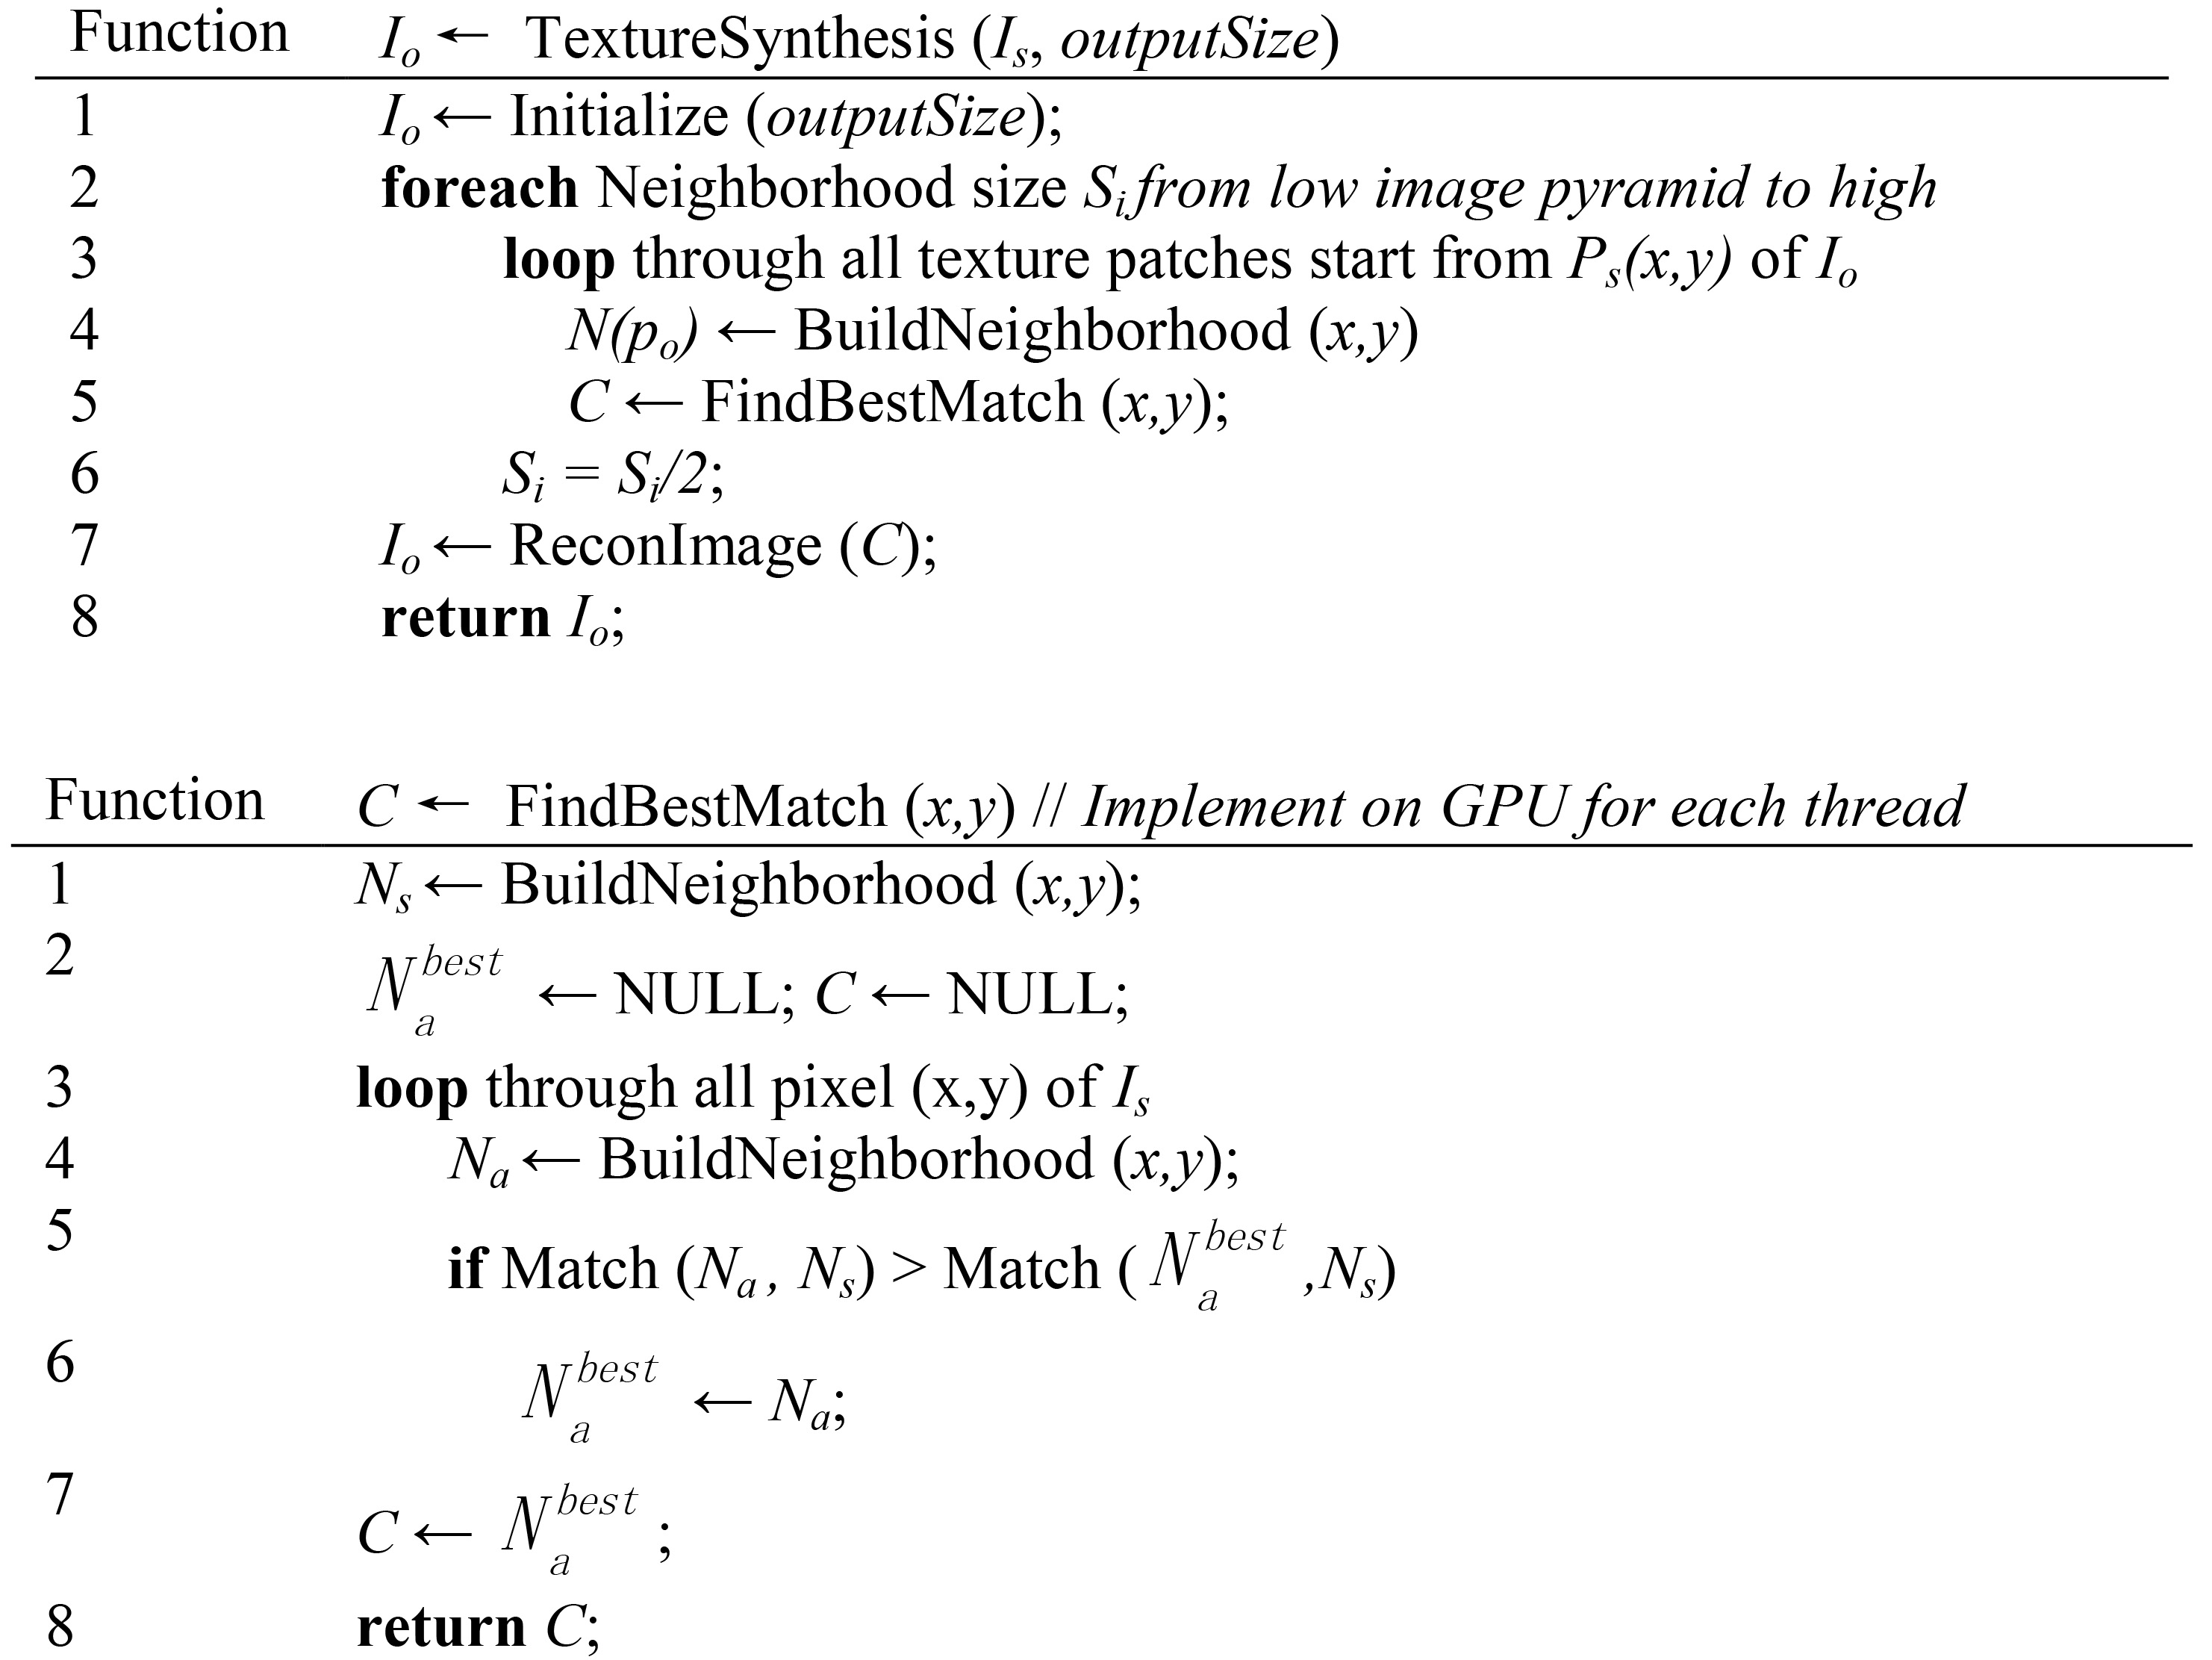 Pseudo code of the algorithm.